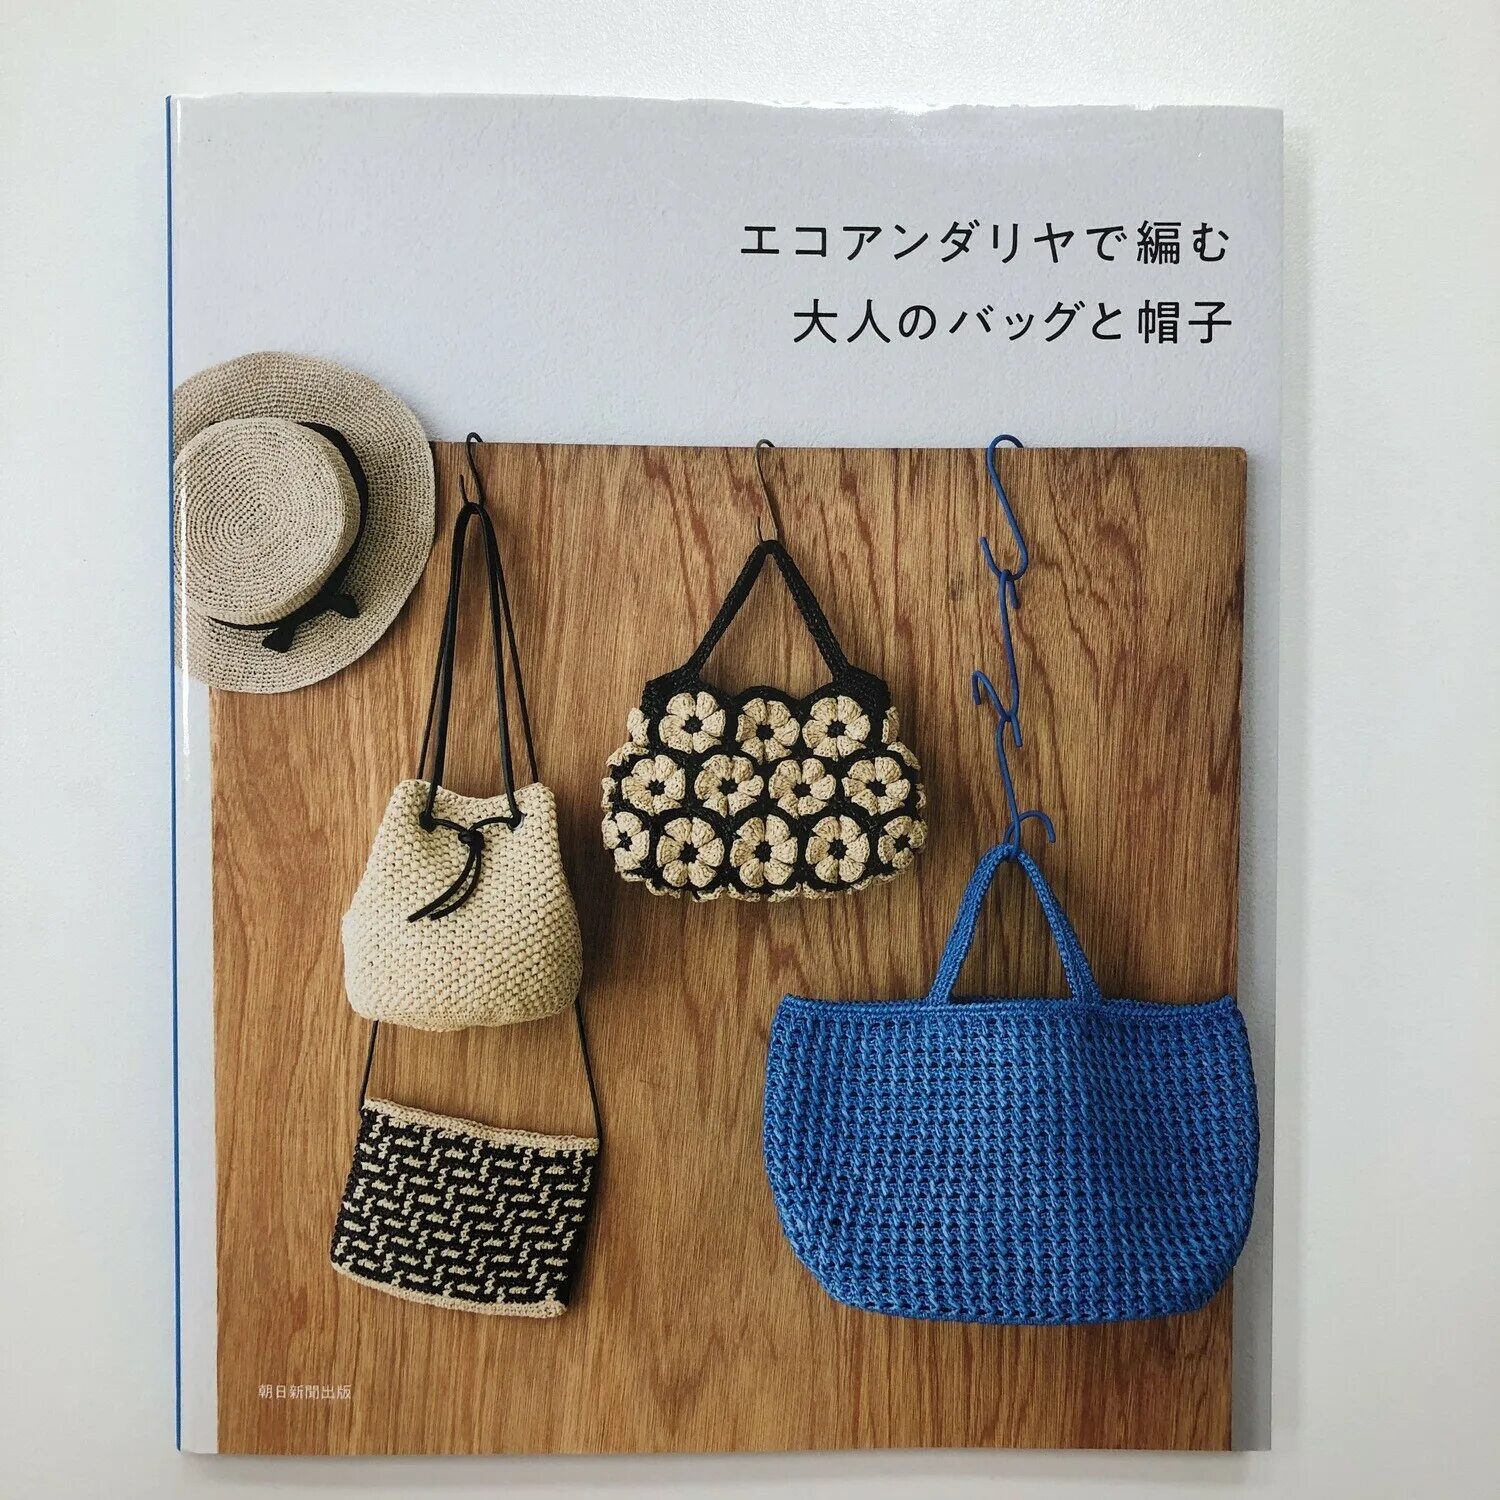 Сумка из рафии Eco Andaria. Сумка Hamanaka из рафии. Рафия японские журналы. Asahi Crochet Bag. Hats bags